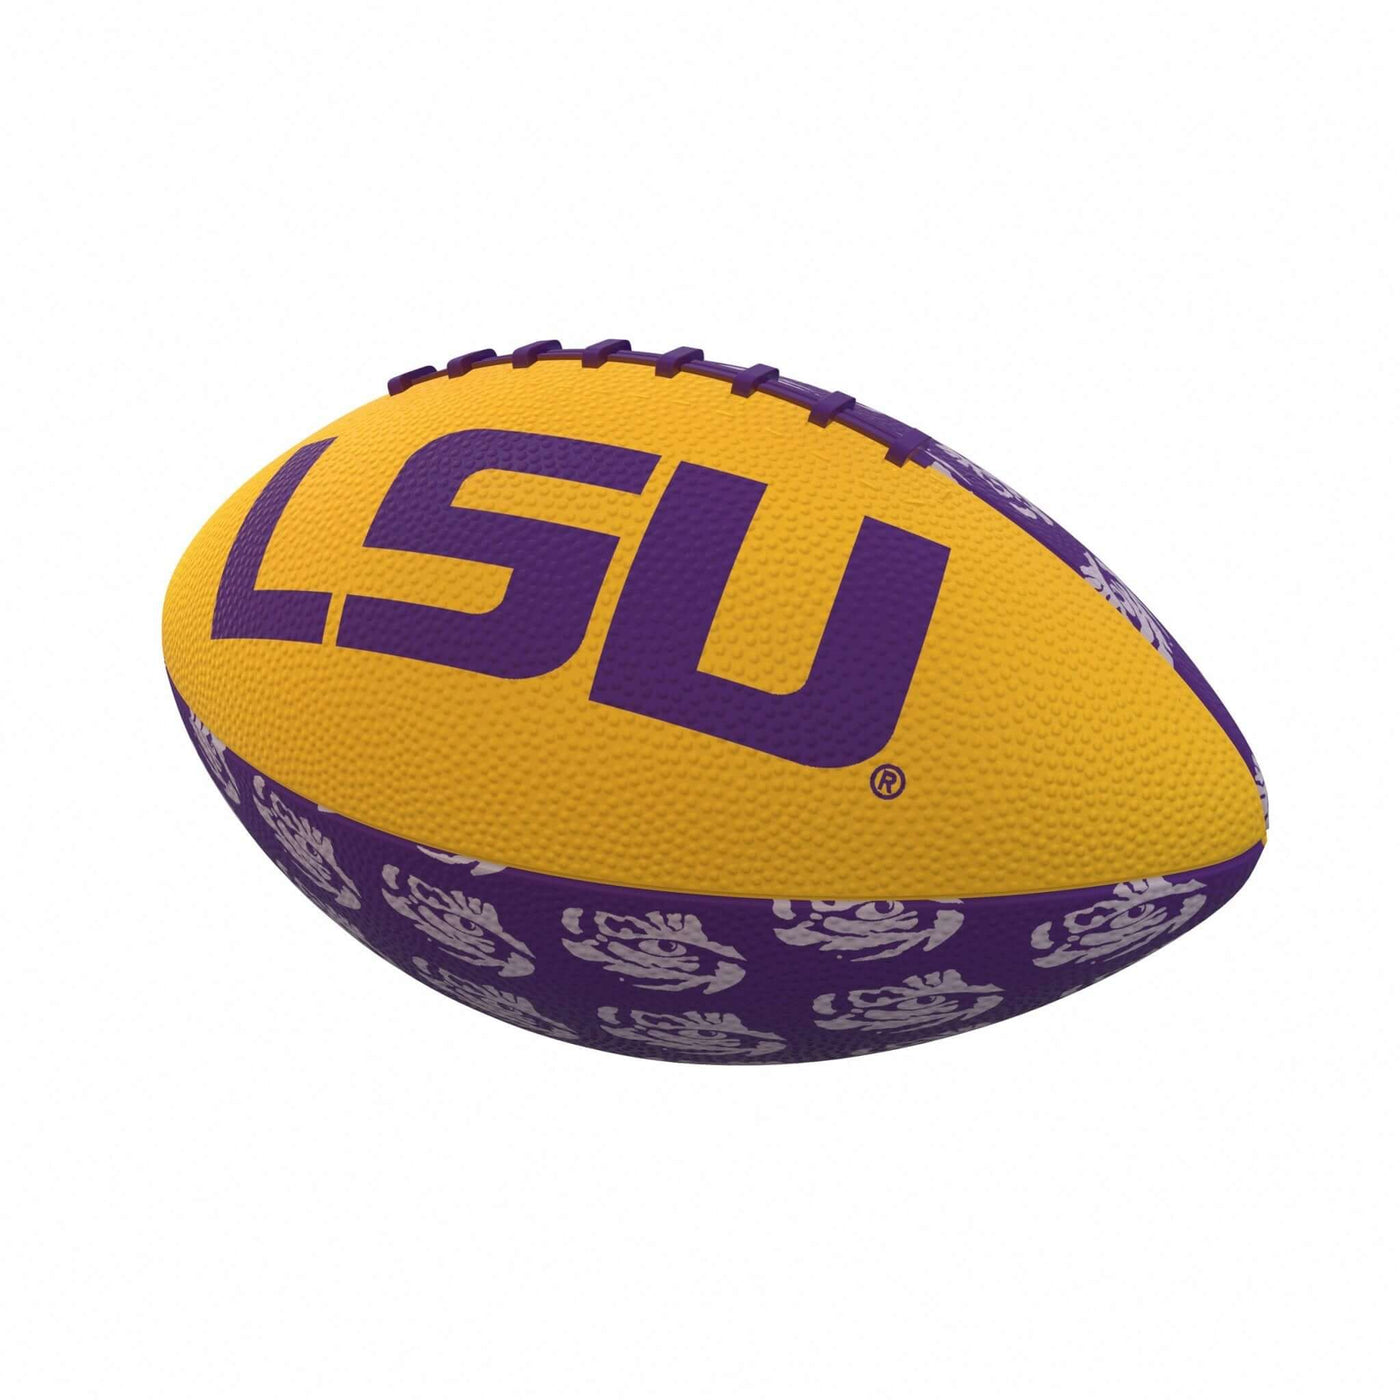 LSU Repeating Mini-Size Rubber Football - Logo Brands